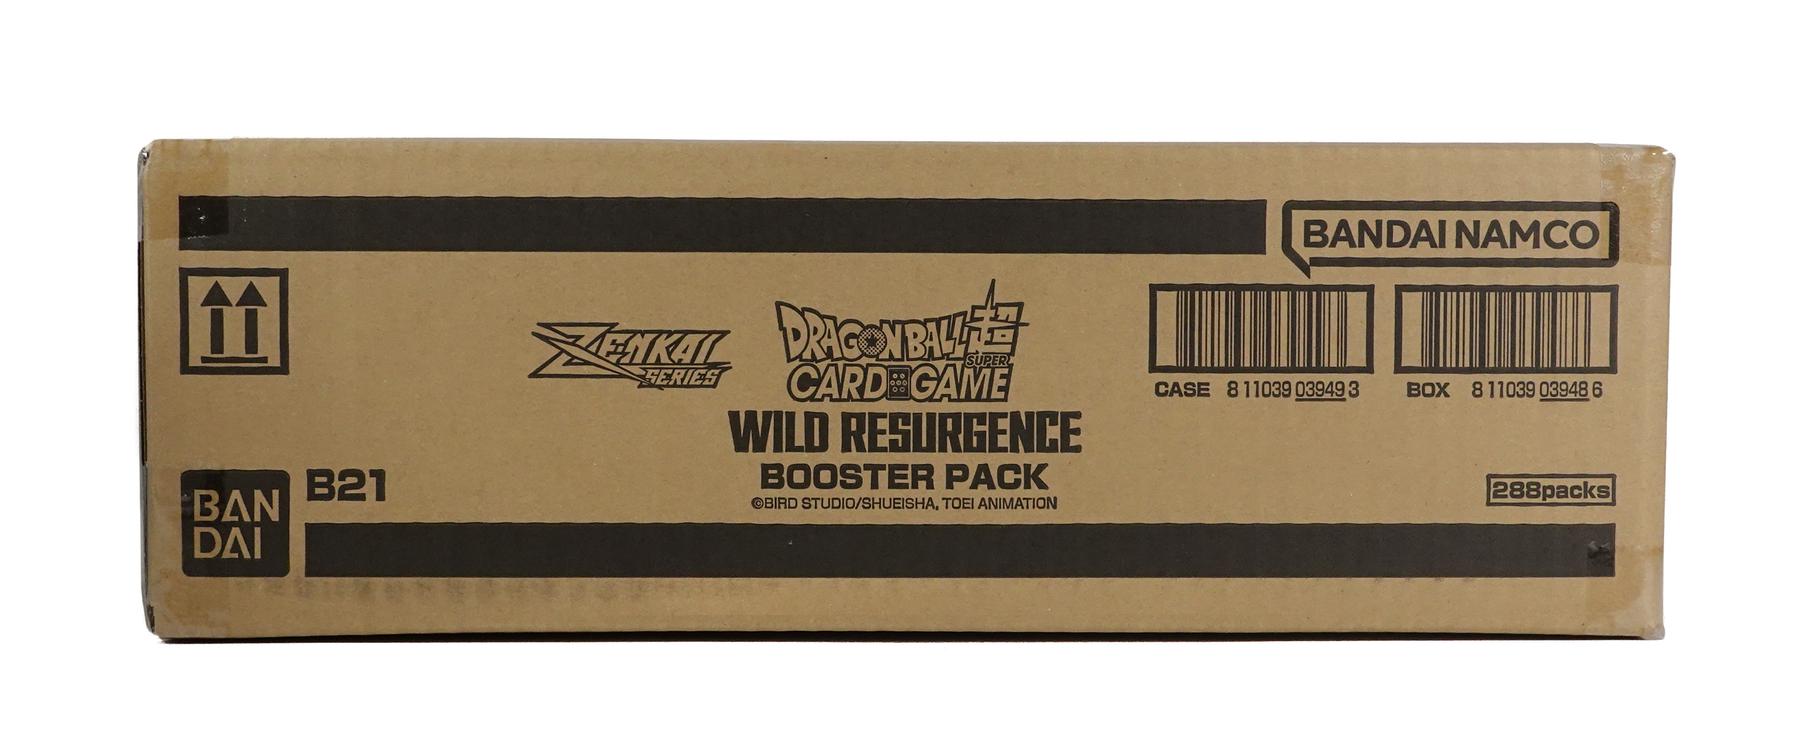 Dragon Ball Z Super Card Game Zenkai Series Wild Resurgence Booster Pack